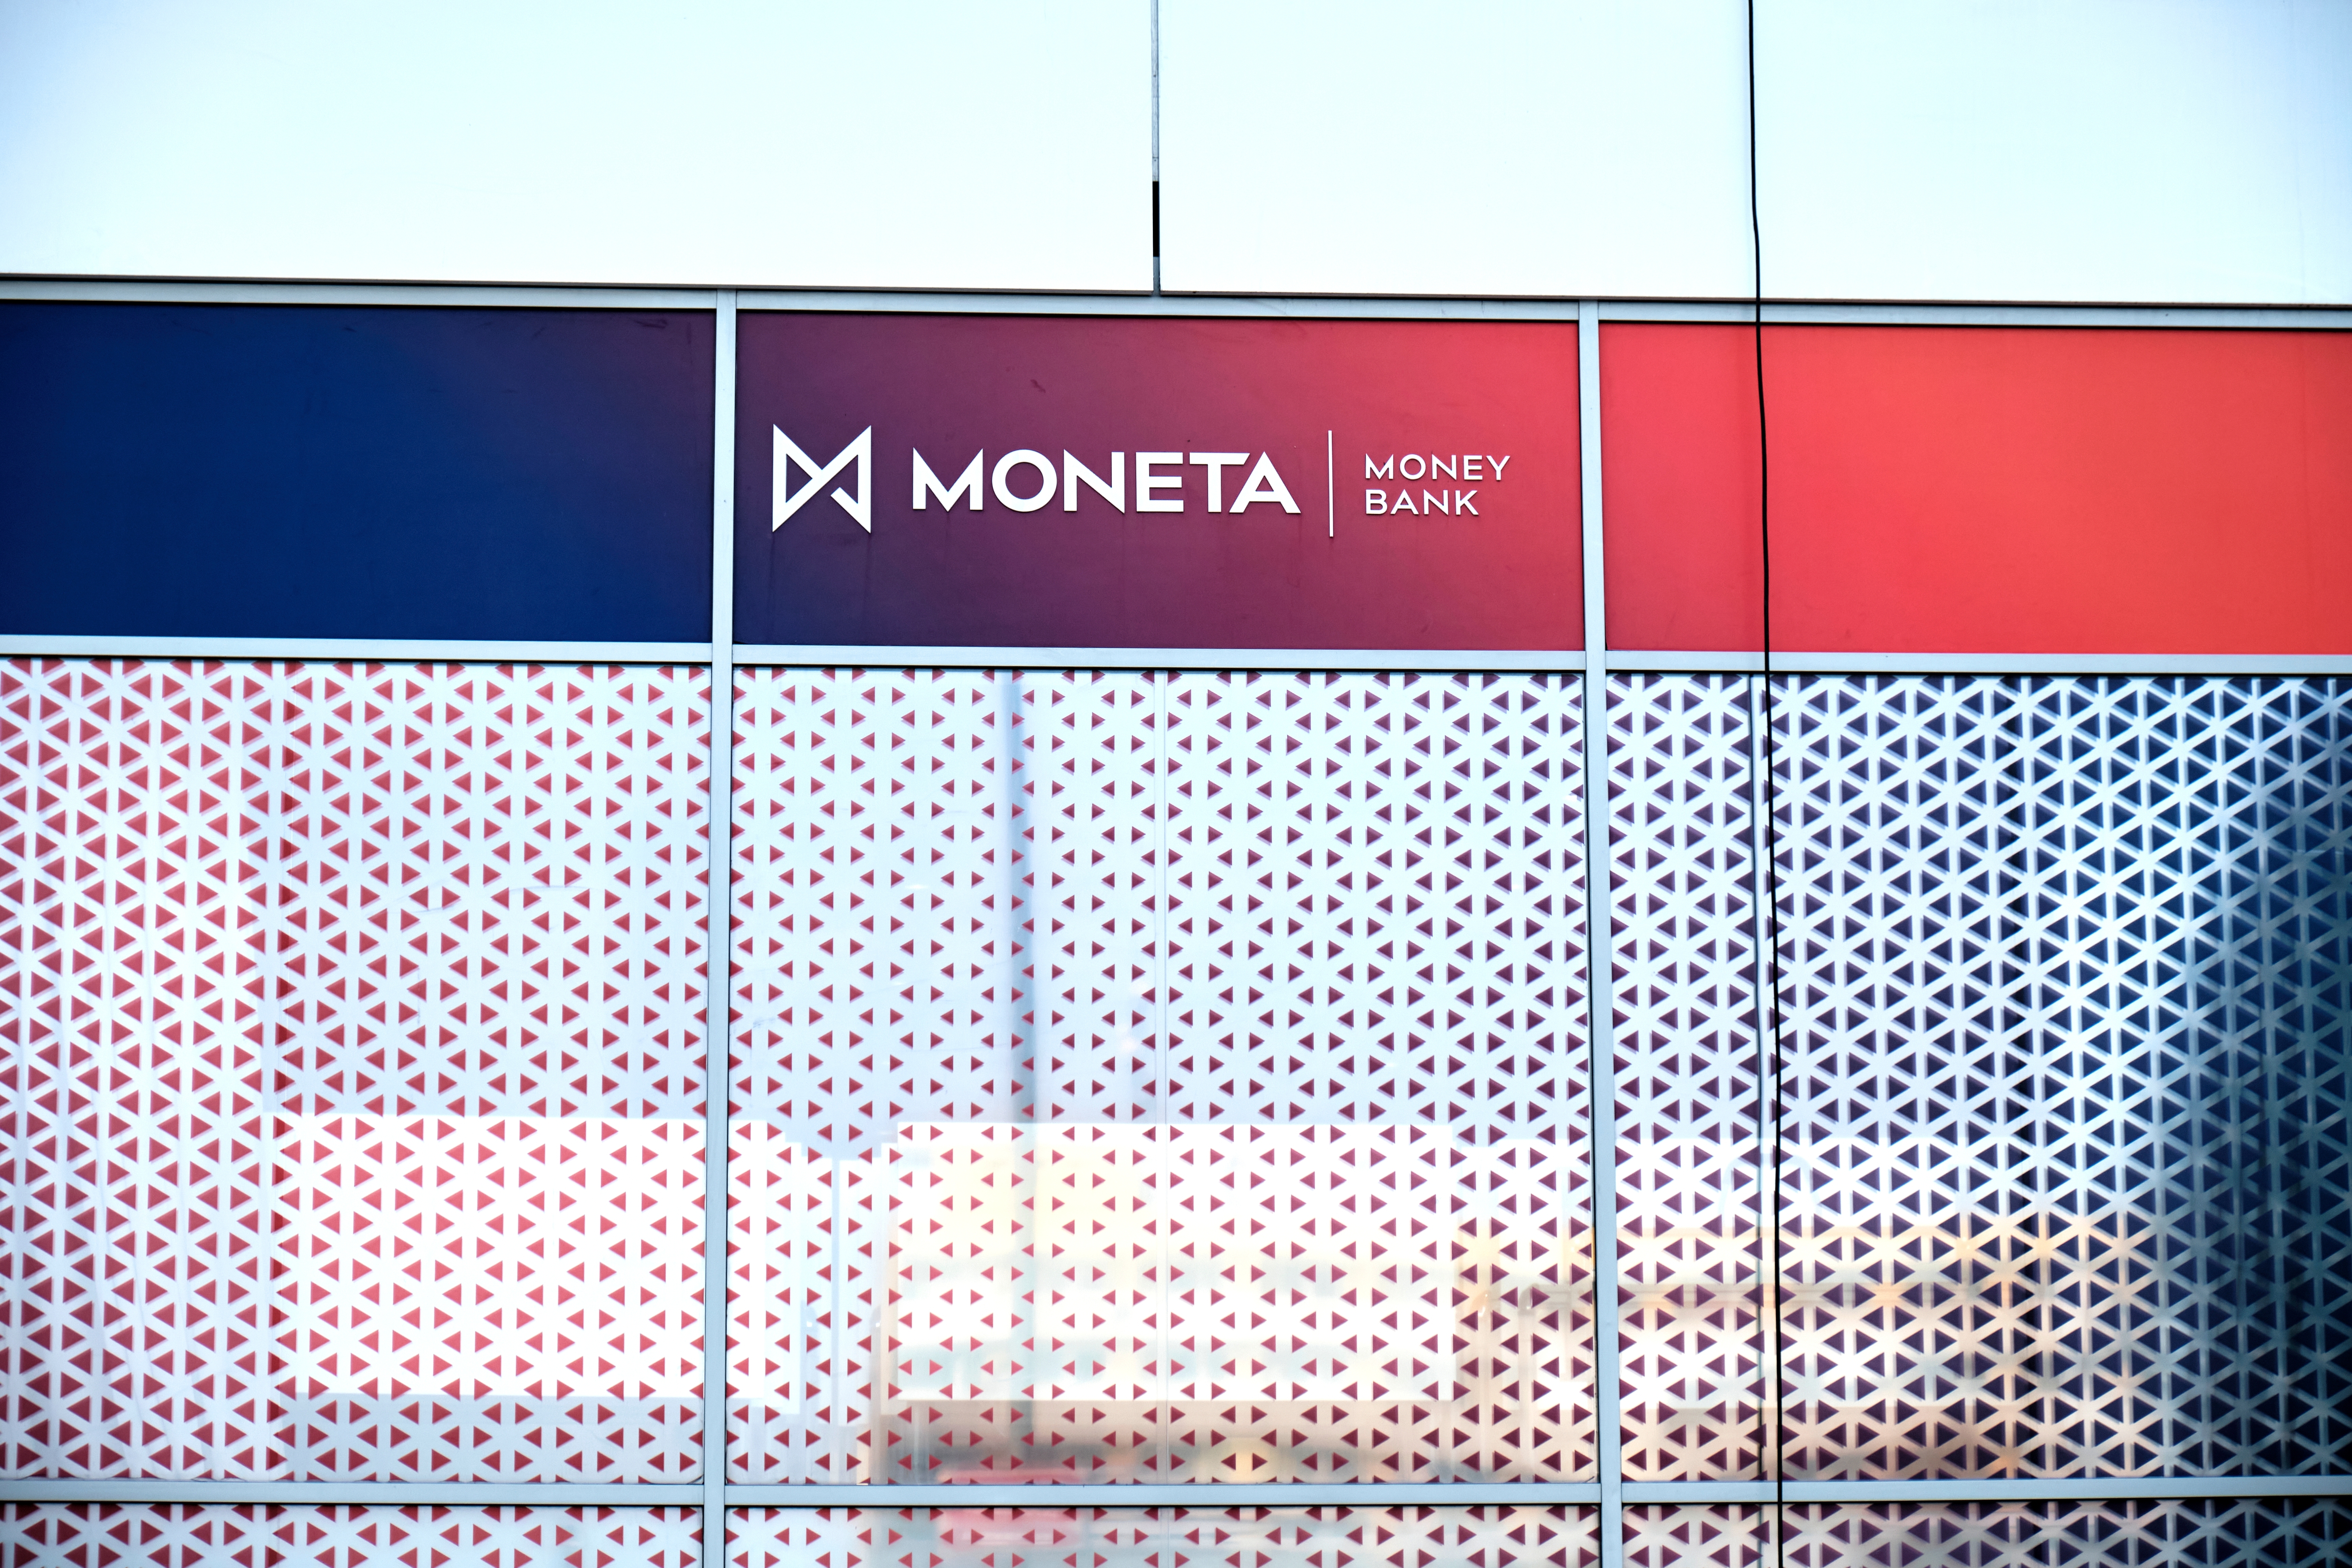 MONETA Money Bank partners with INULTA